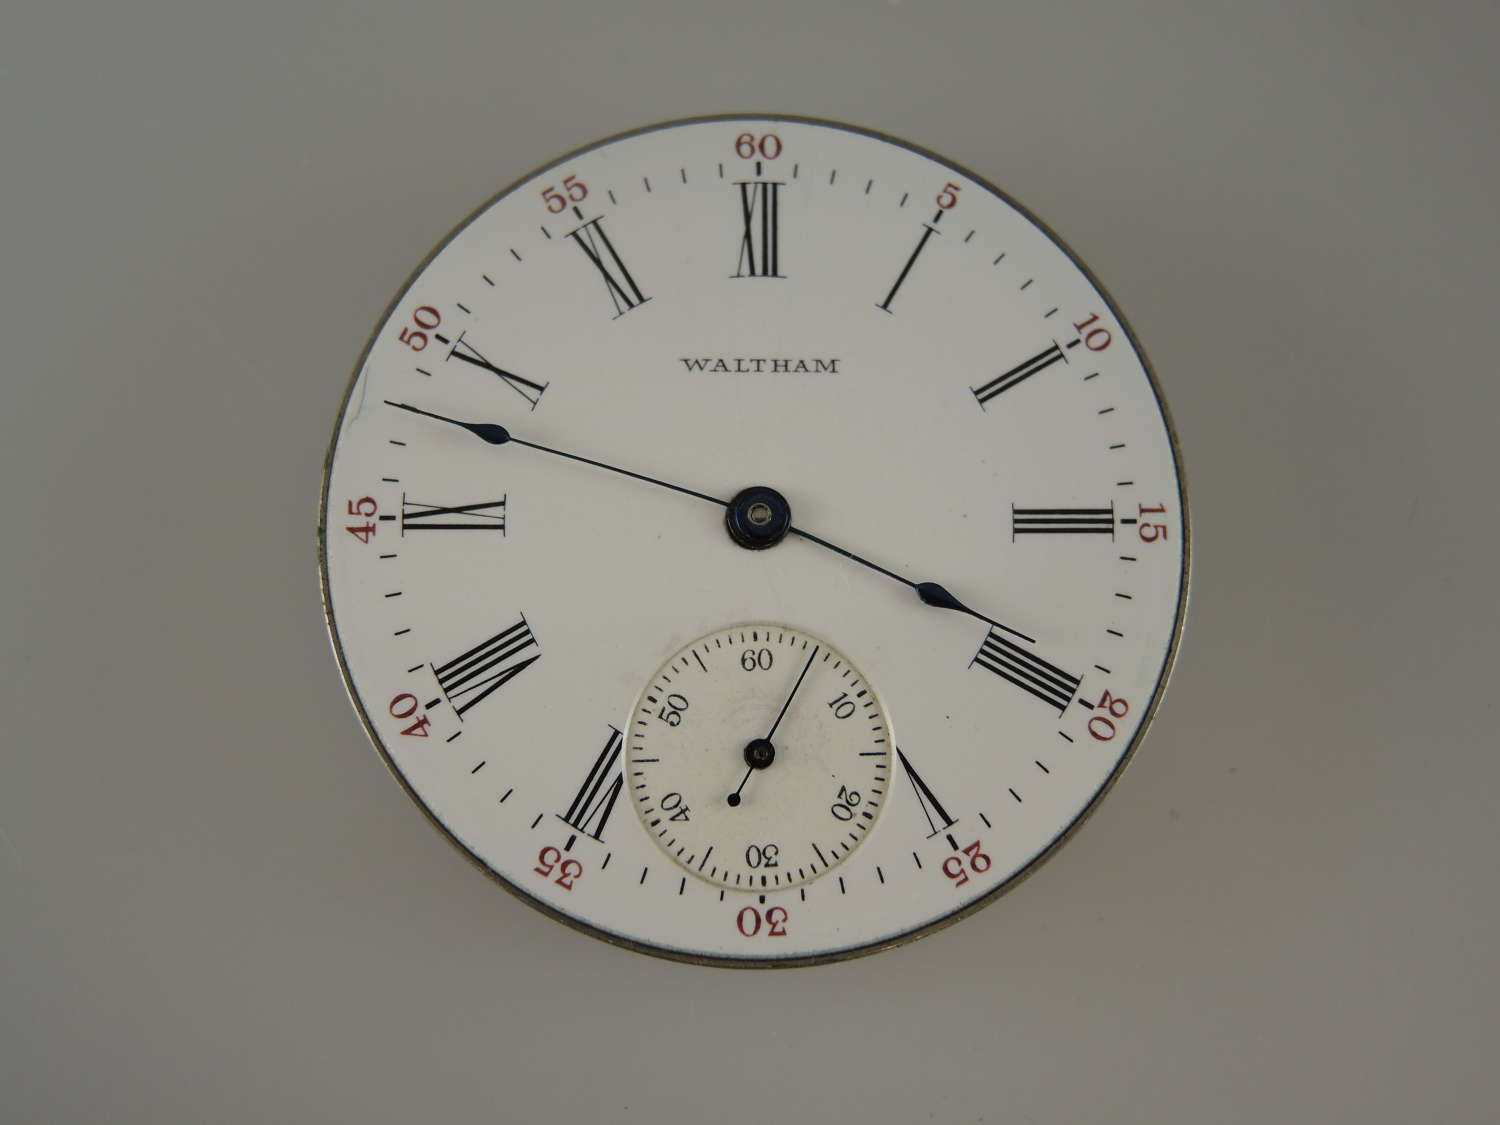 16s 17 Jewel Waltham pocket watch movement c1912